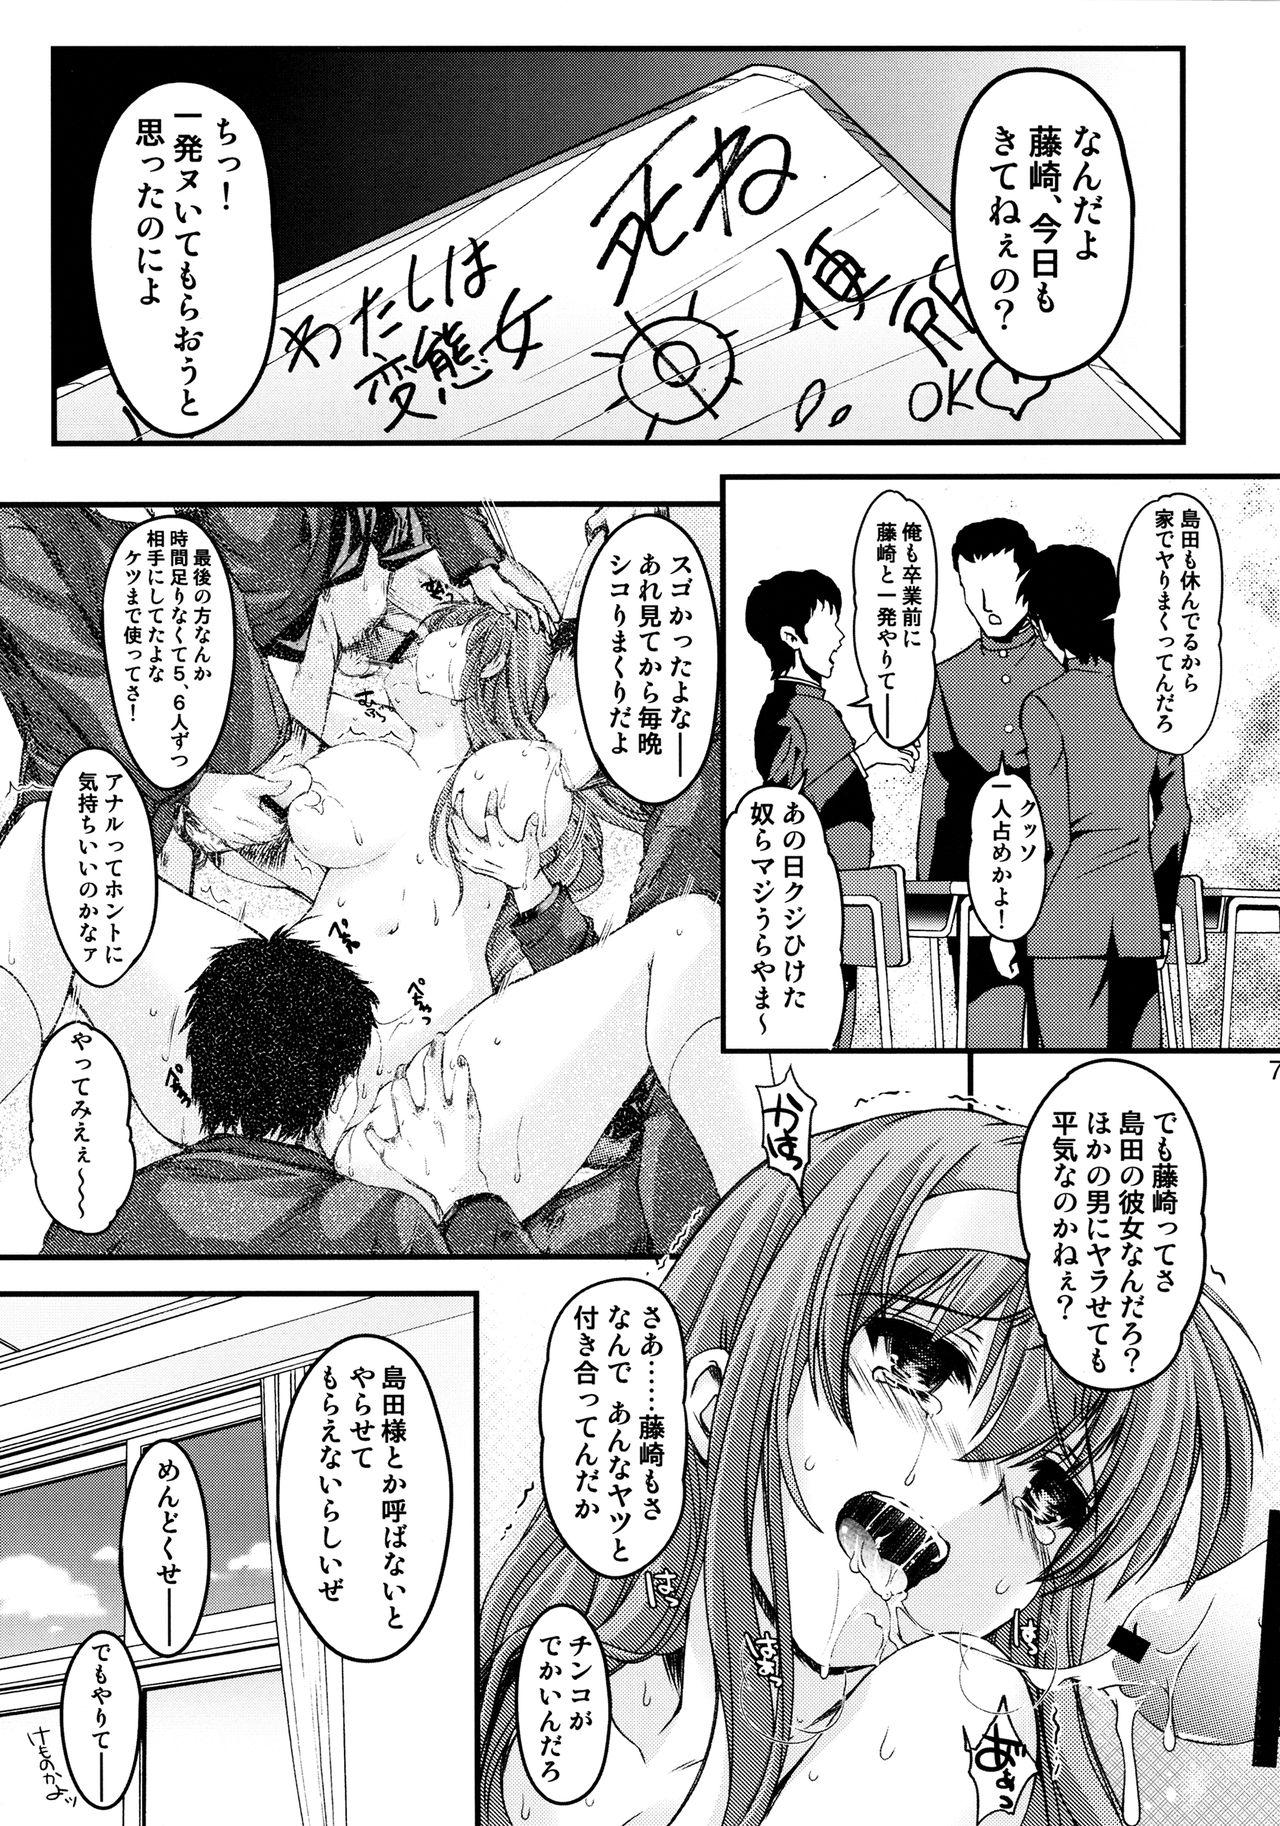 Buttfucking Shiori Vol.22 Her Mind Drifting Without Purpose - Tokimeki memorial Parties - Page 6